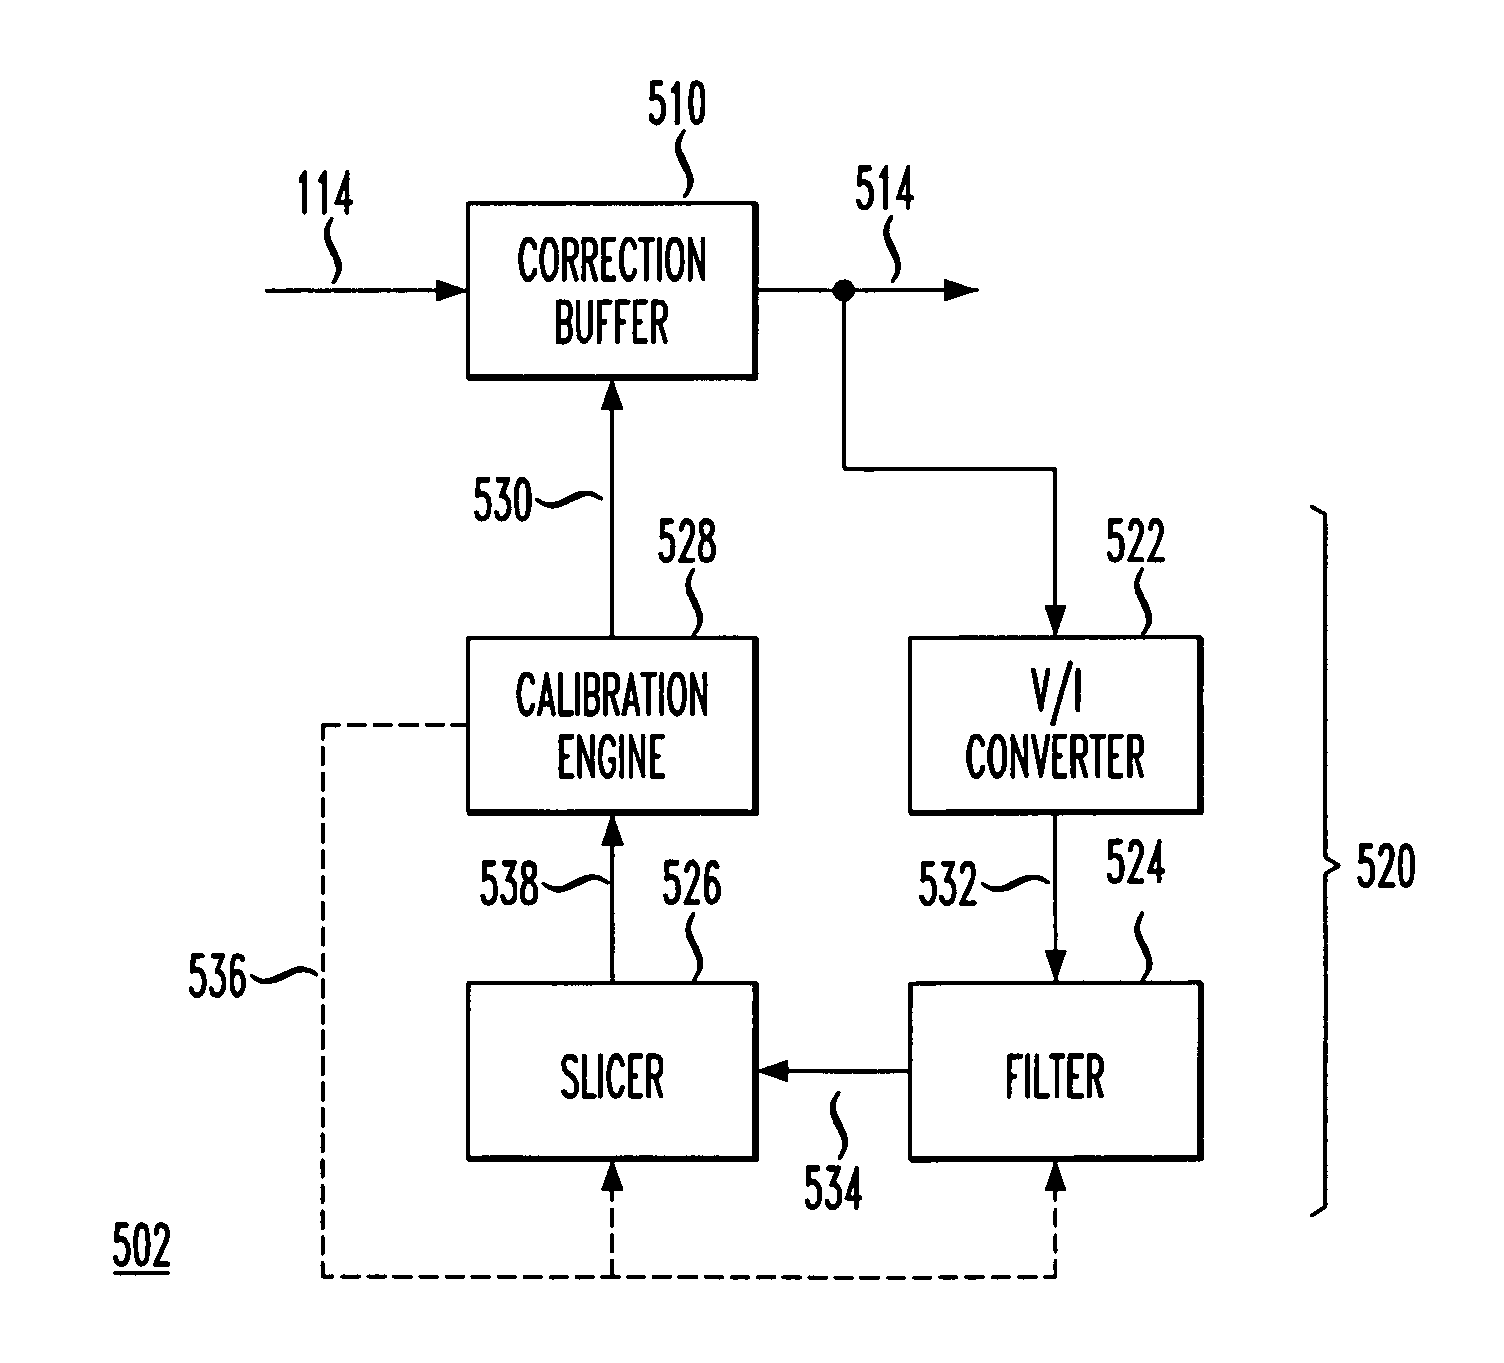 Duty-cycle correction circuit